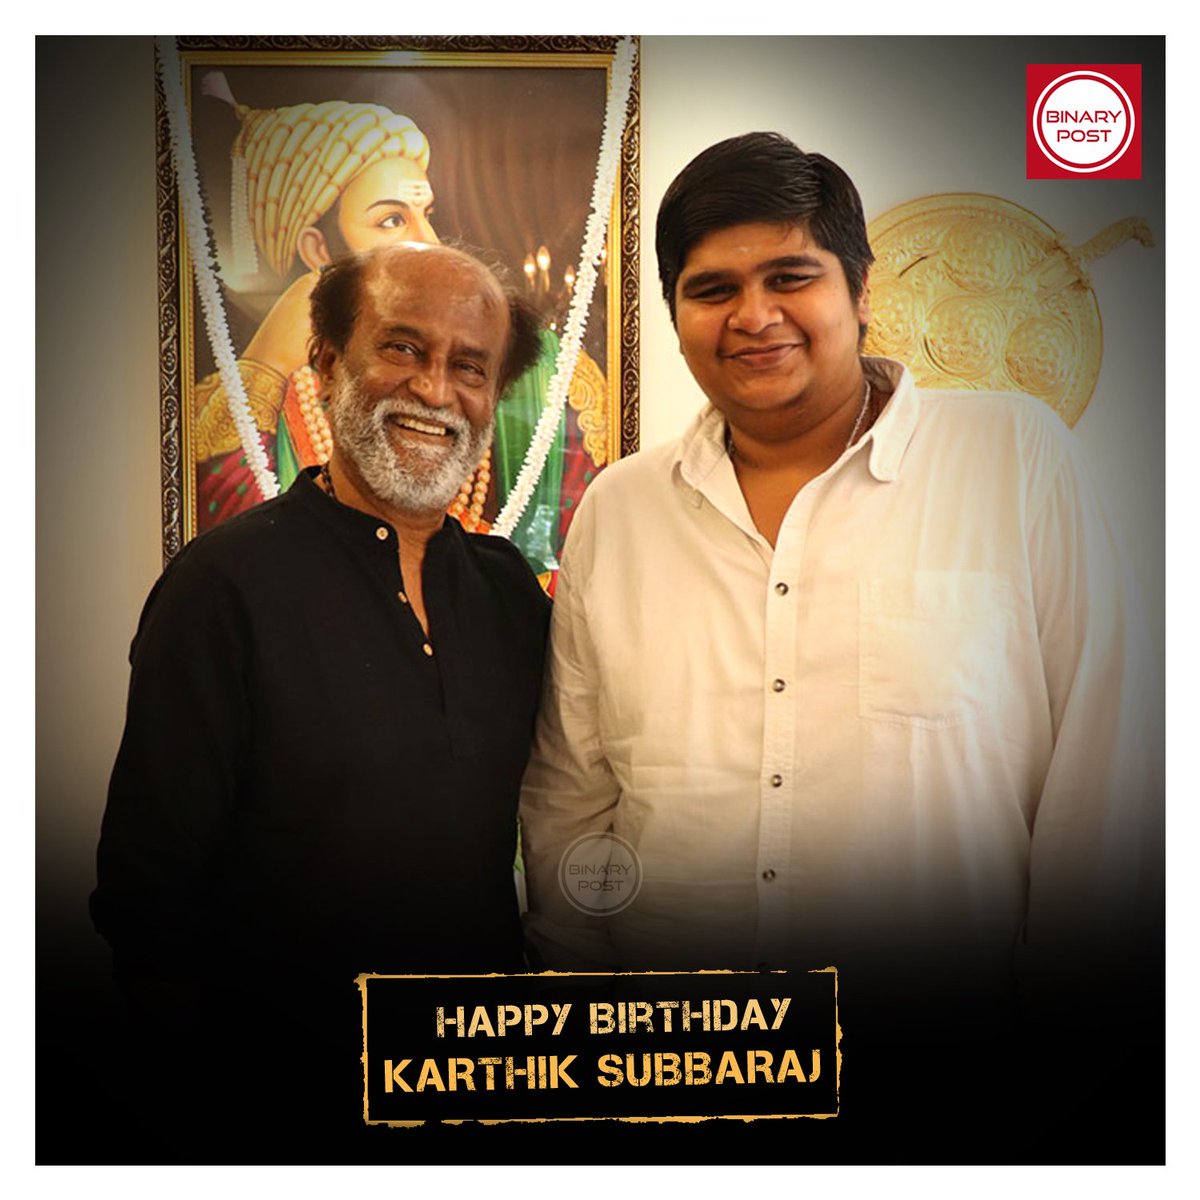 Happy Birthday @karthiksubbaraj ...

#HBDKarthikSubbaraj #Thalaivar 🤘 #Superstar #Rajinikanth #BinaryPost